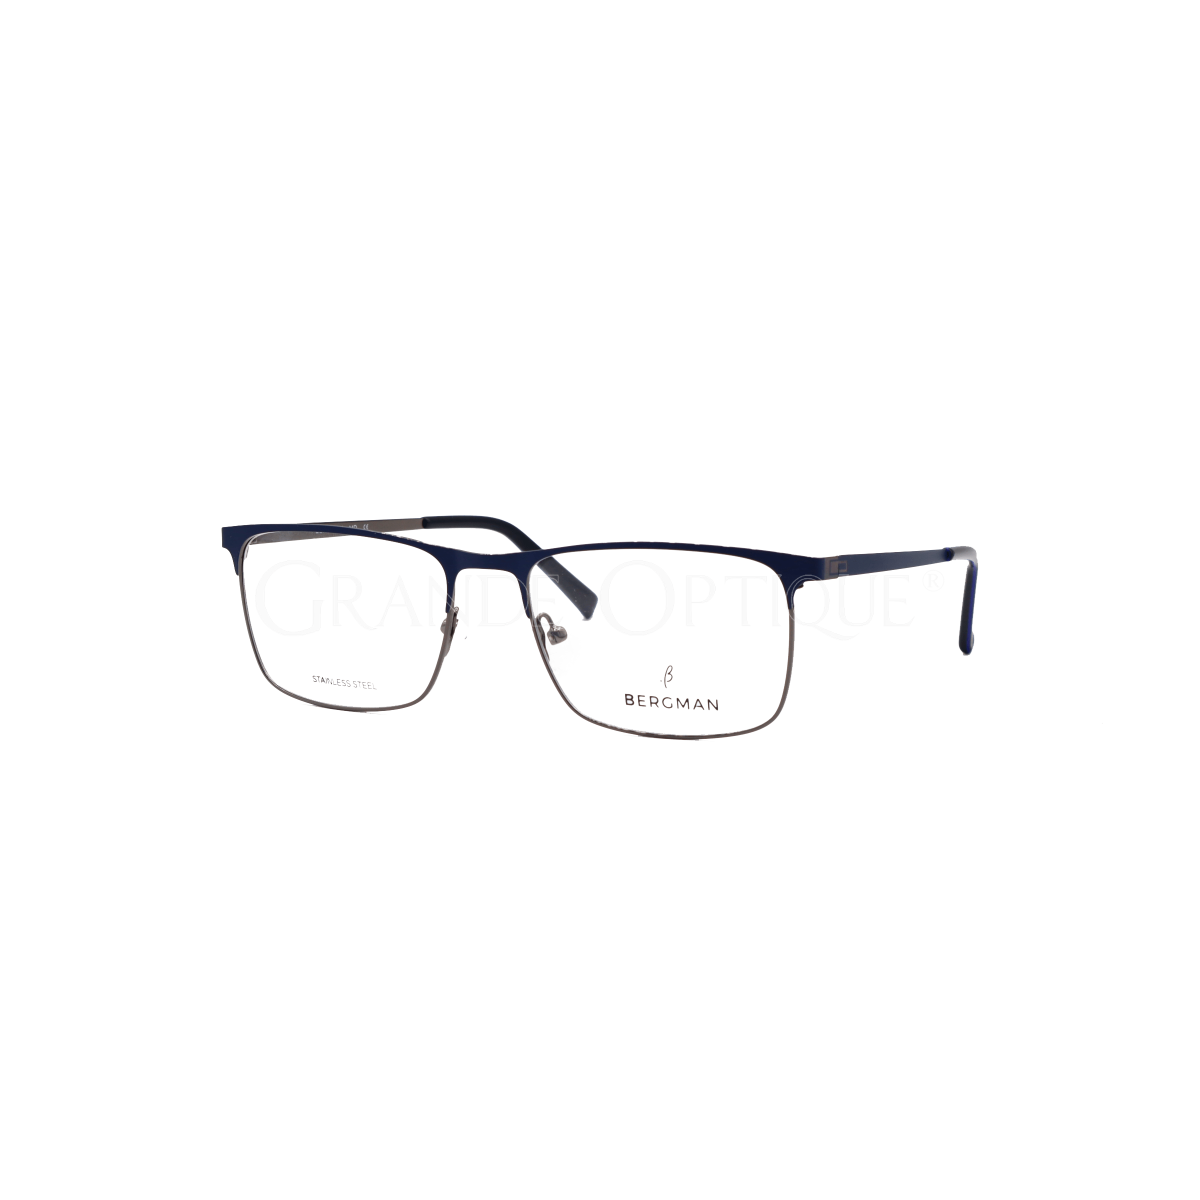 Rame de ochelari Bergman 5509 c6